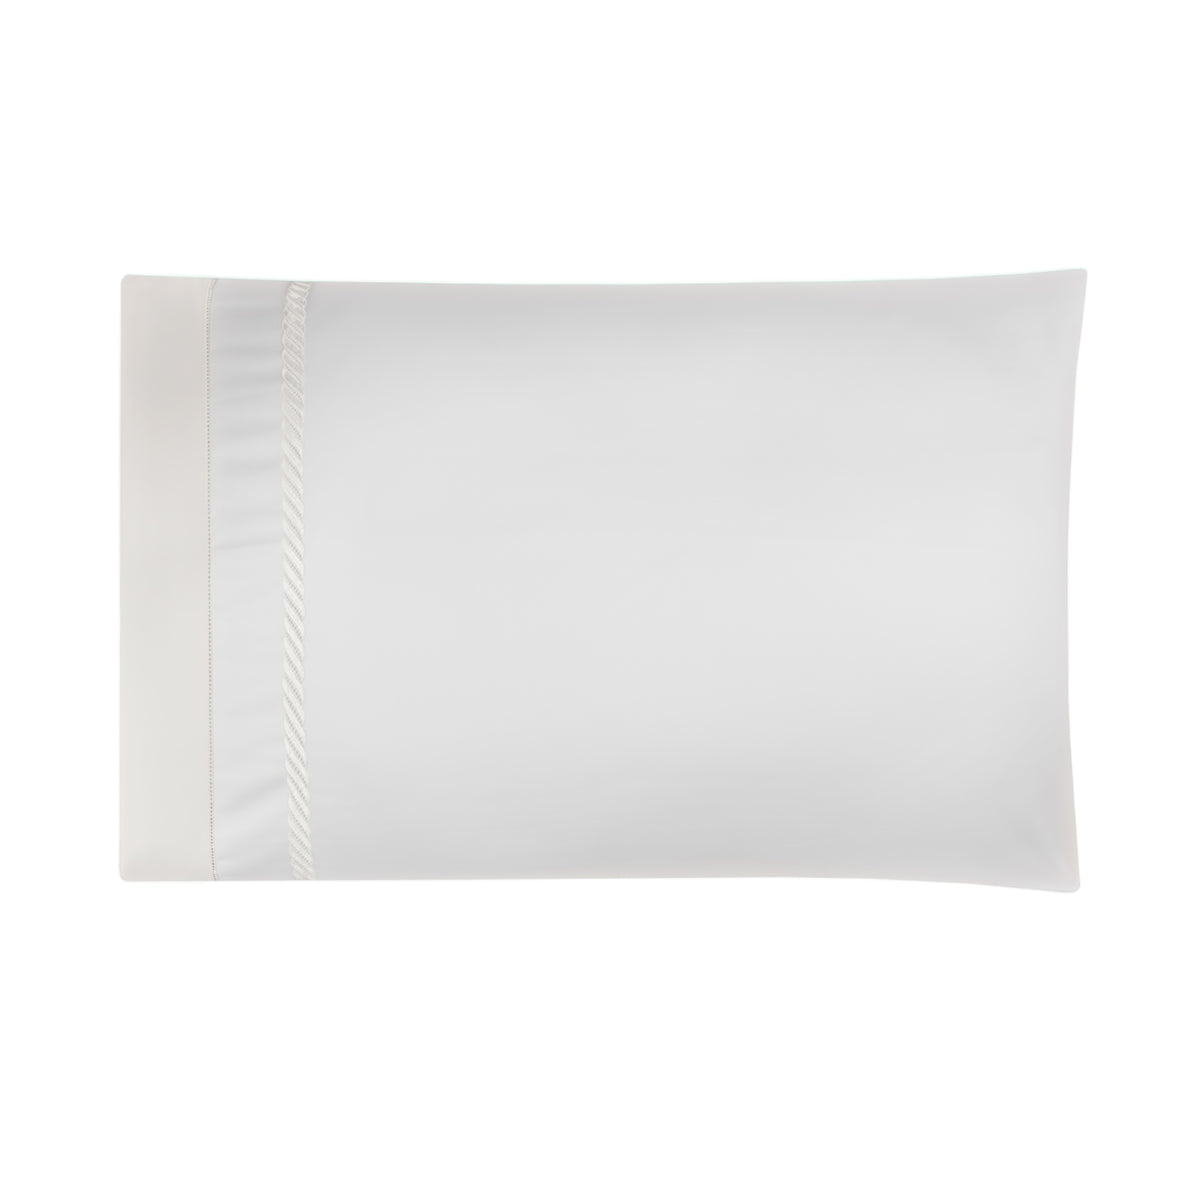 Silo of BOVI Simone Bedding Pillowcase White Ivory Colored